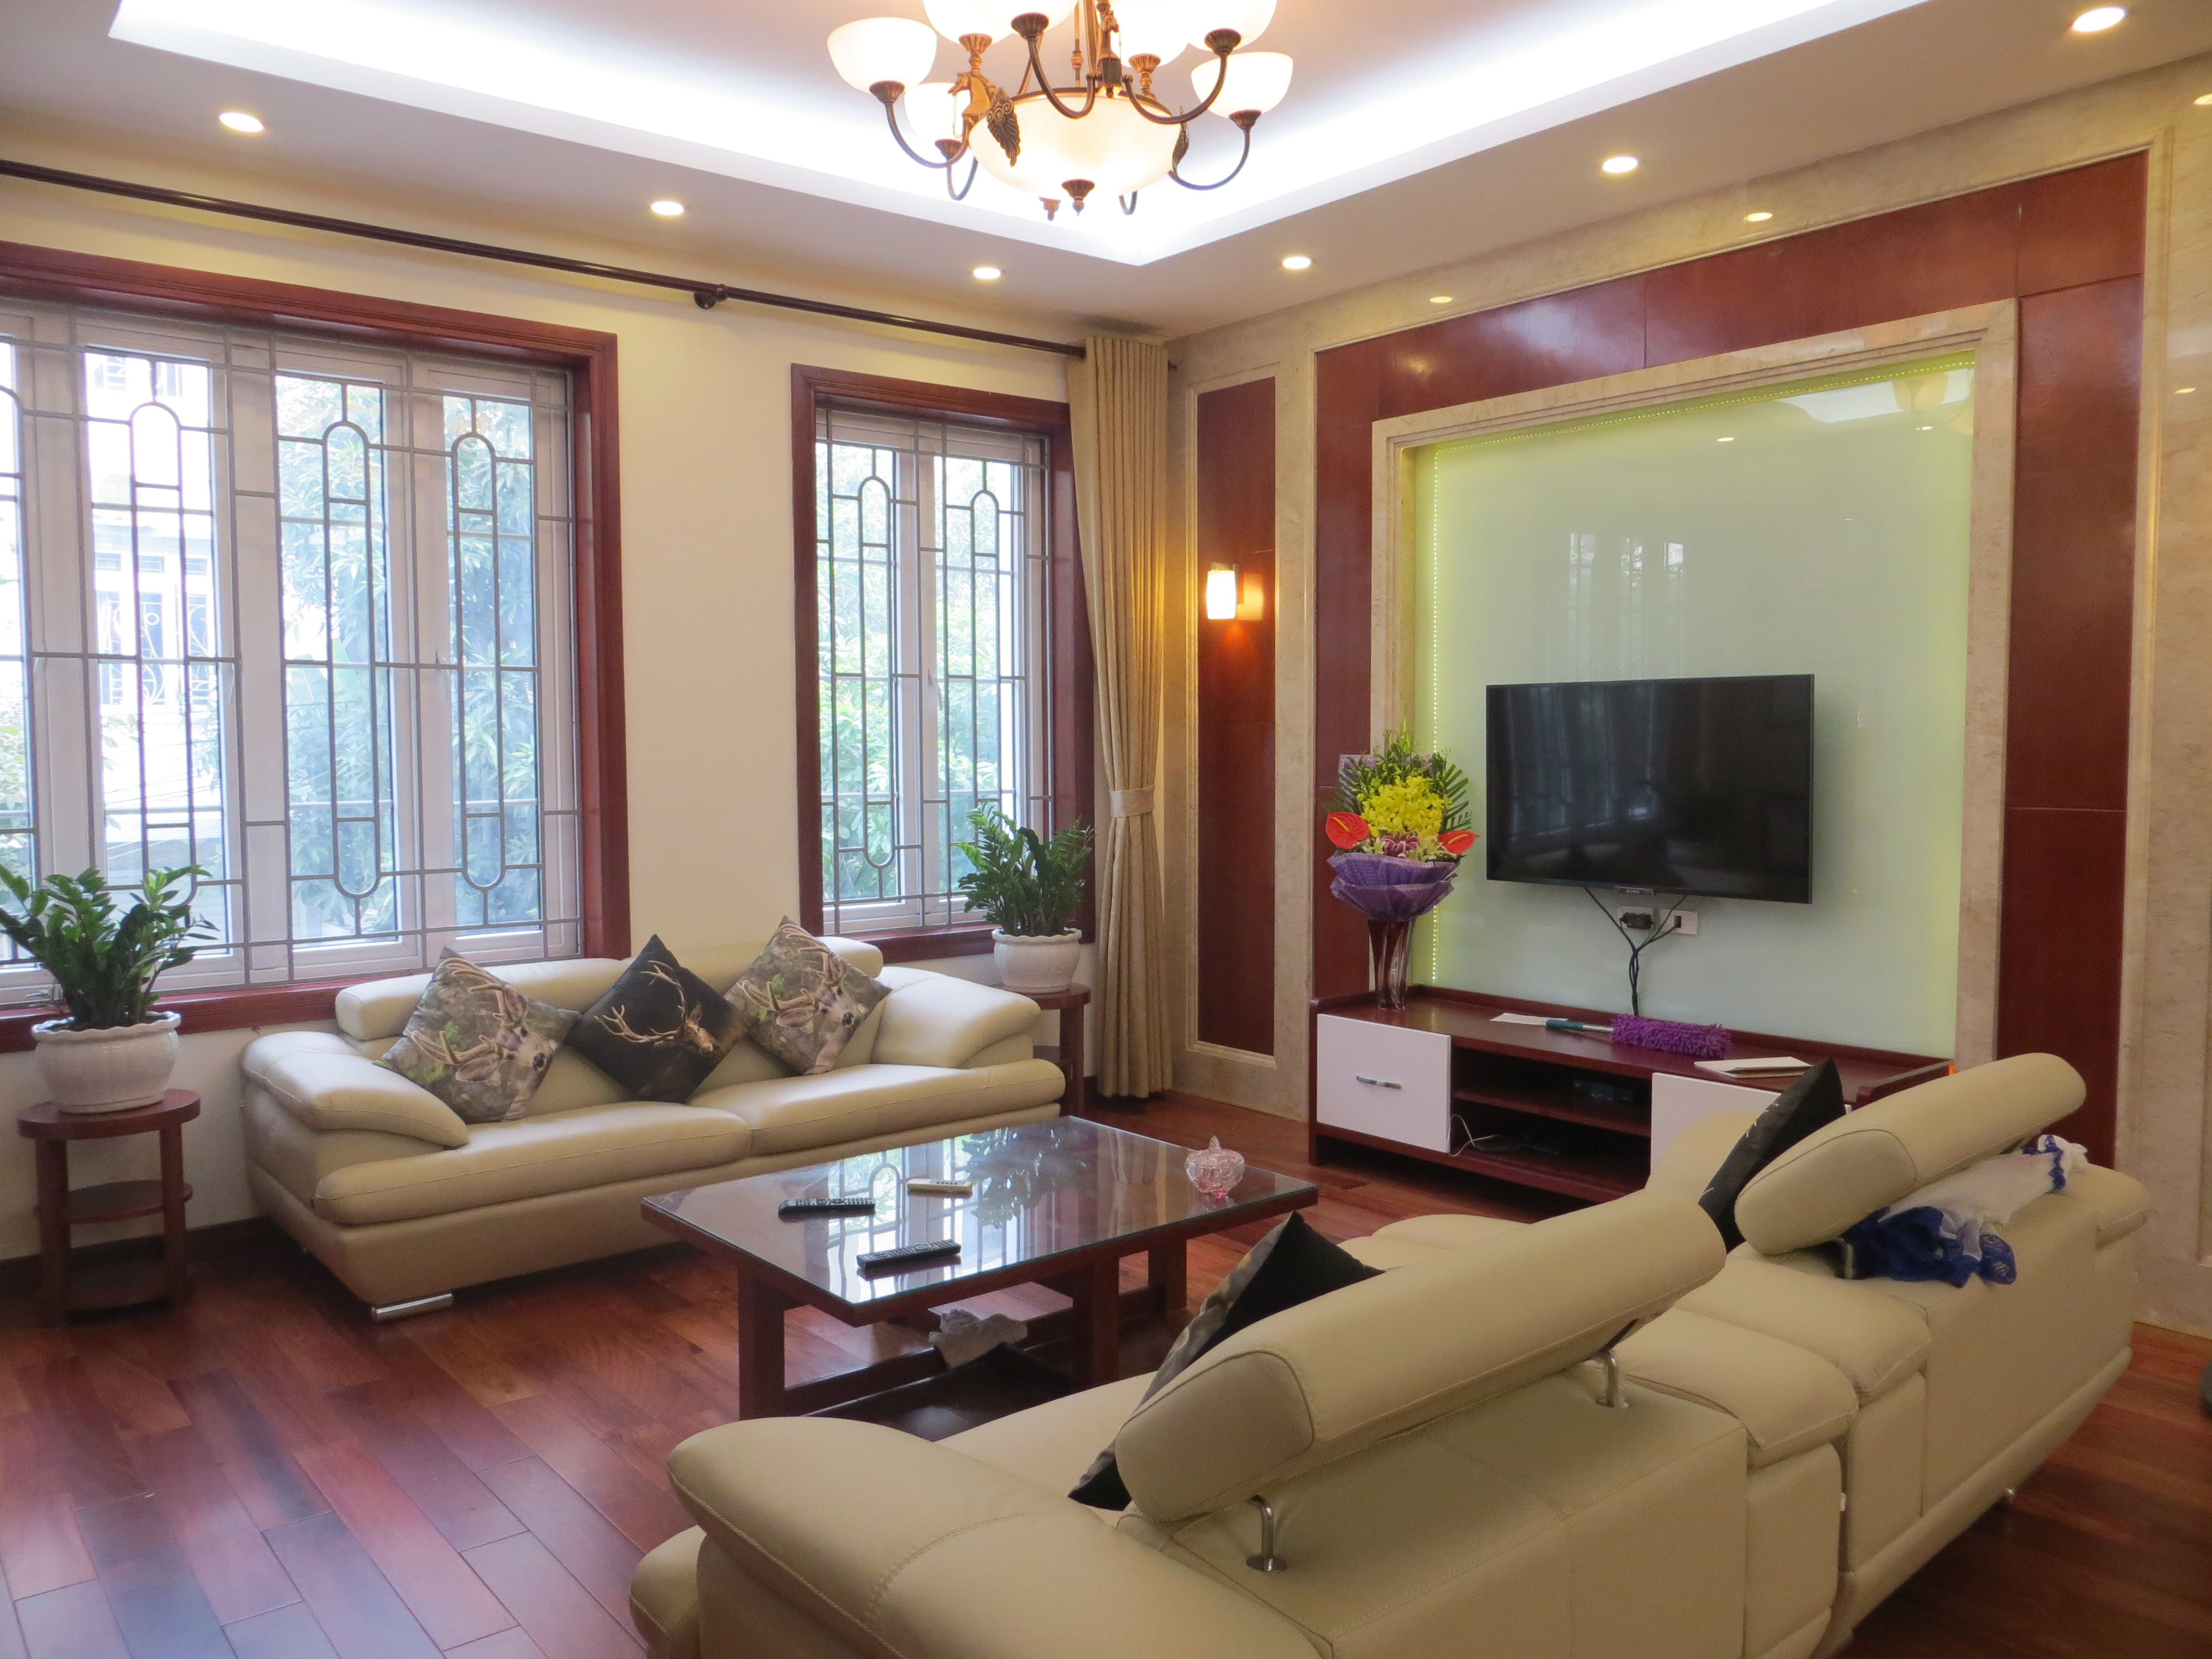 Splendid villa in Cau Giay area, Hanoi for rent